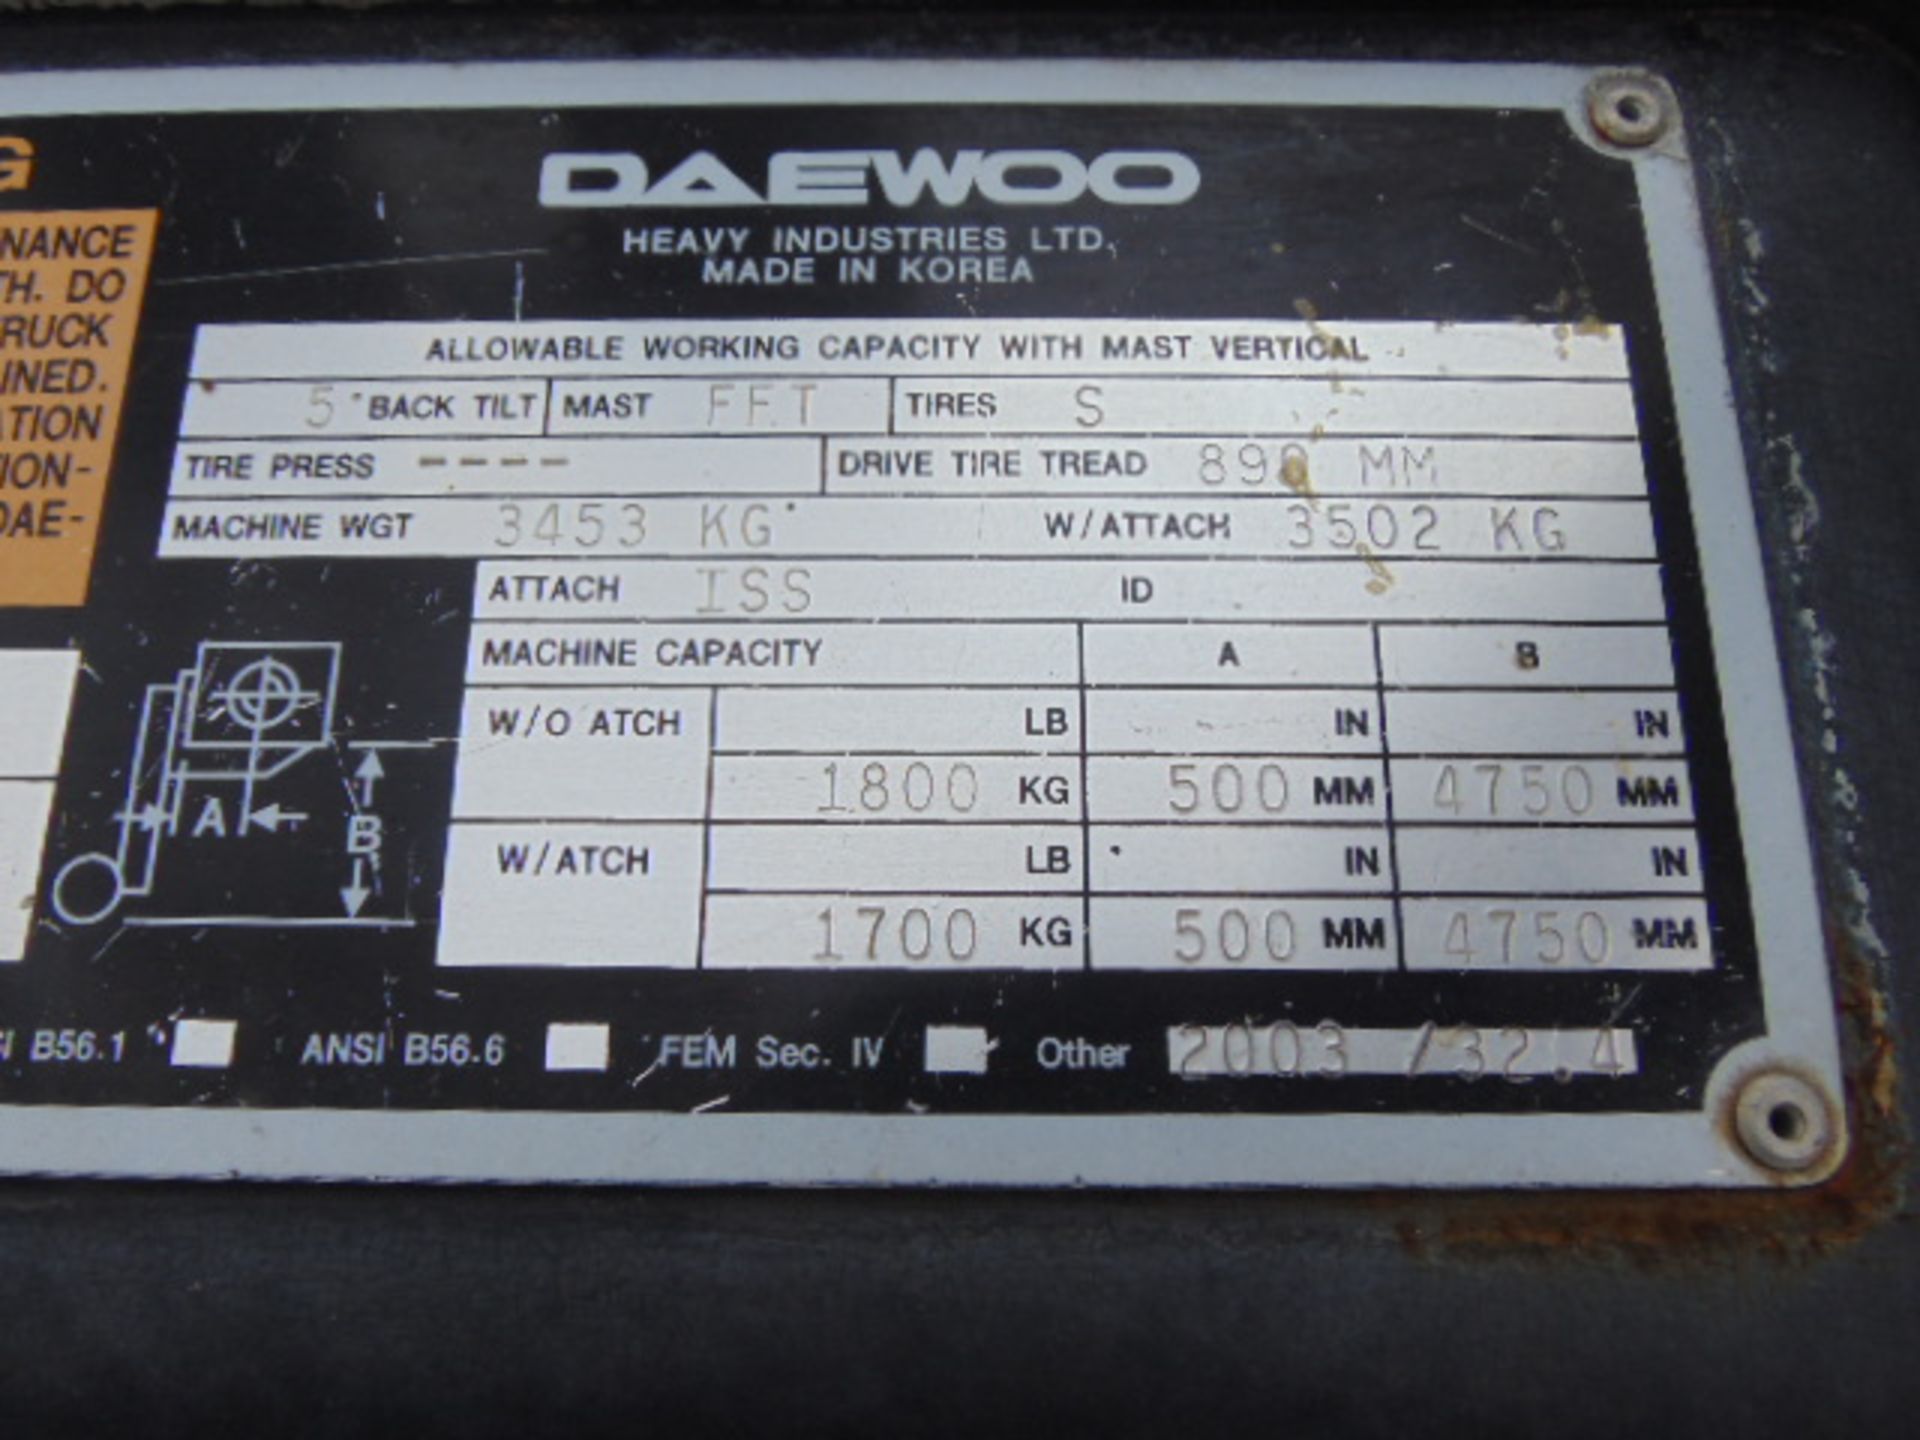 Daewoo D20SC-2 Counter Balance Diesel Forklift - Image 17 of 18